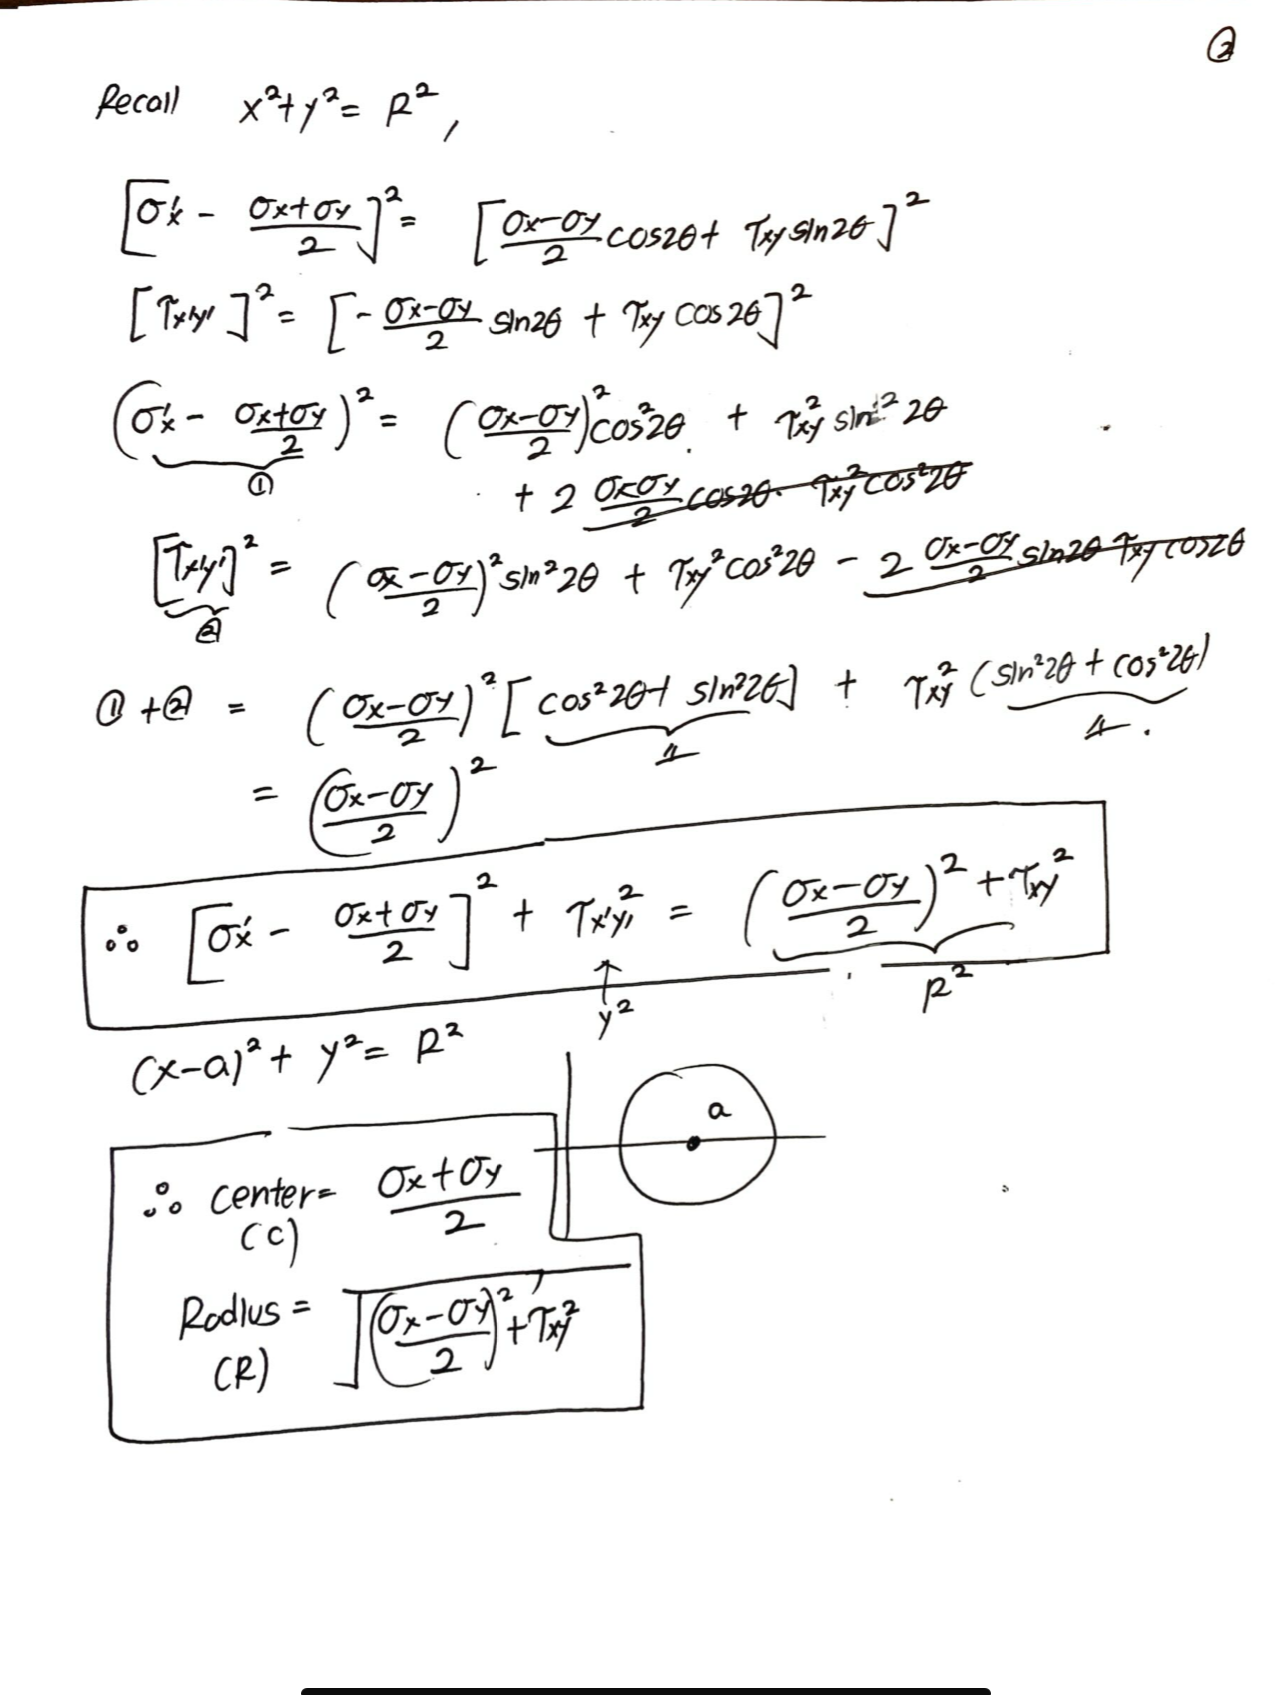 Morh's circle derivation